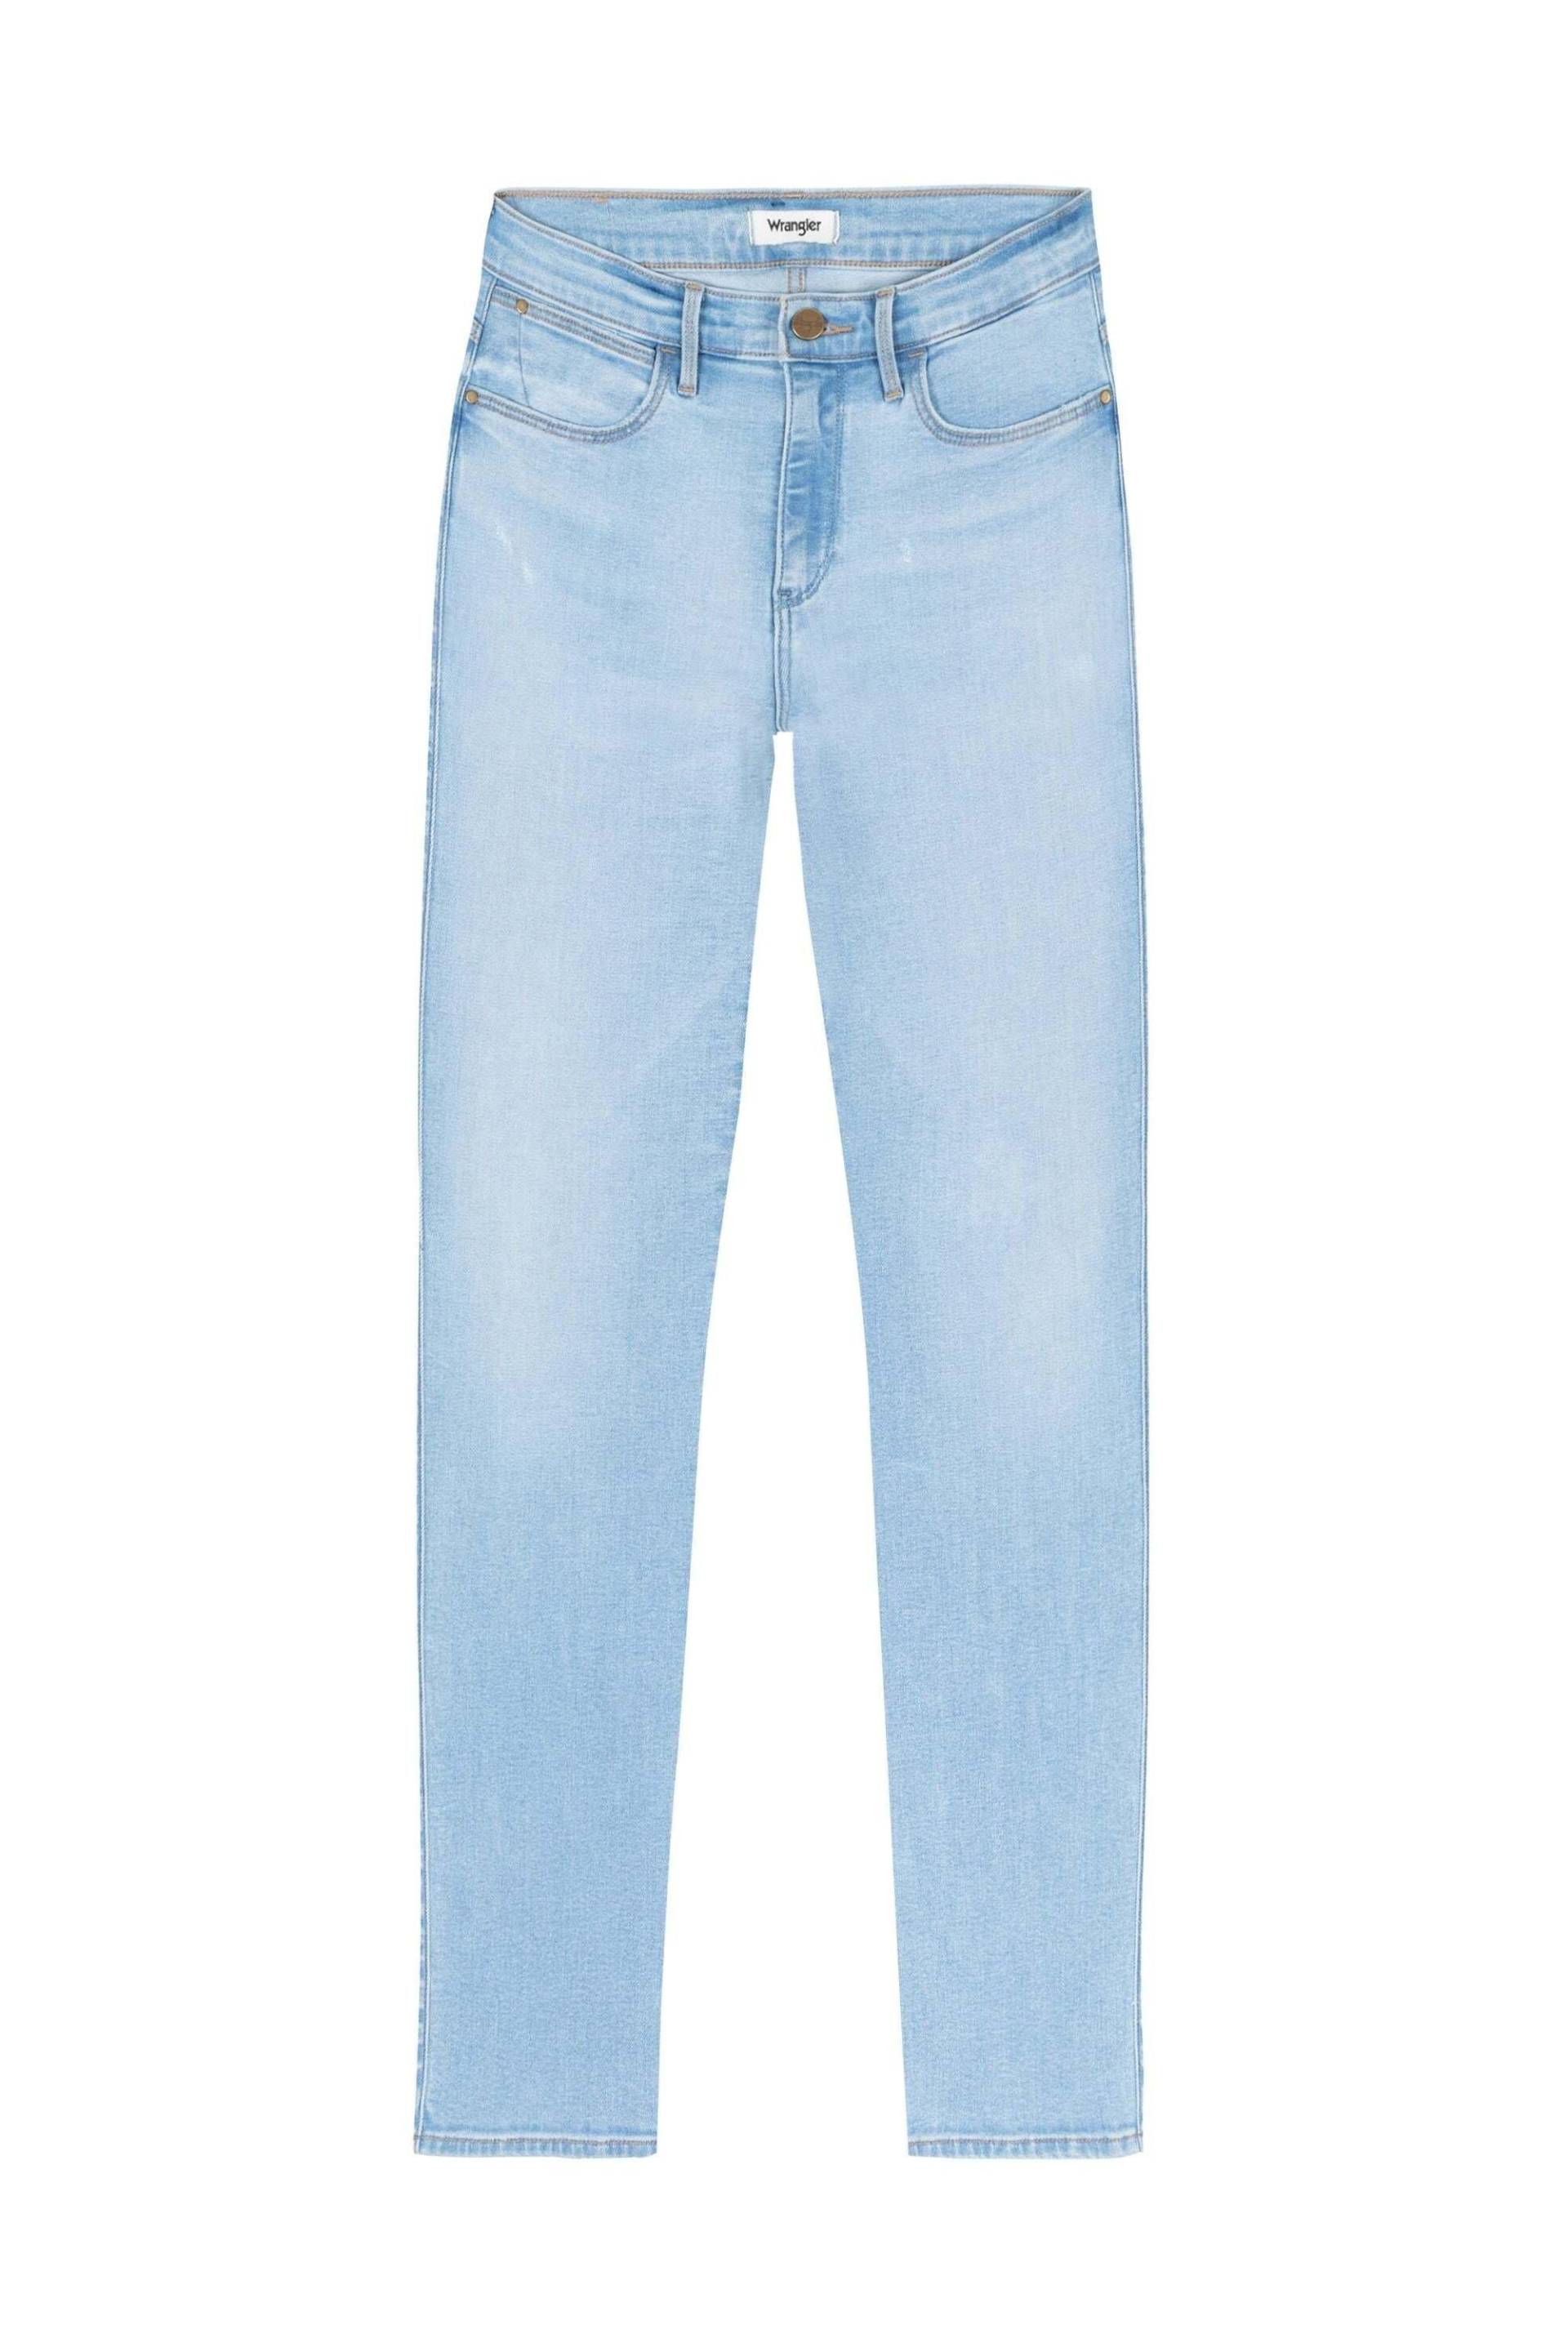 Jeans High Skinny Damen Blau L30/W29 von Wrangler